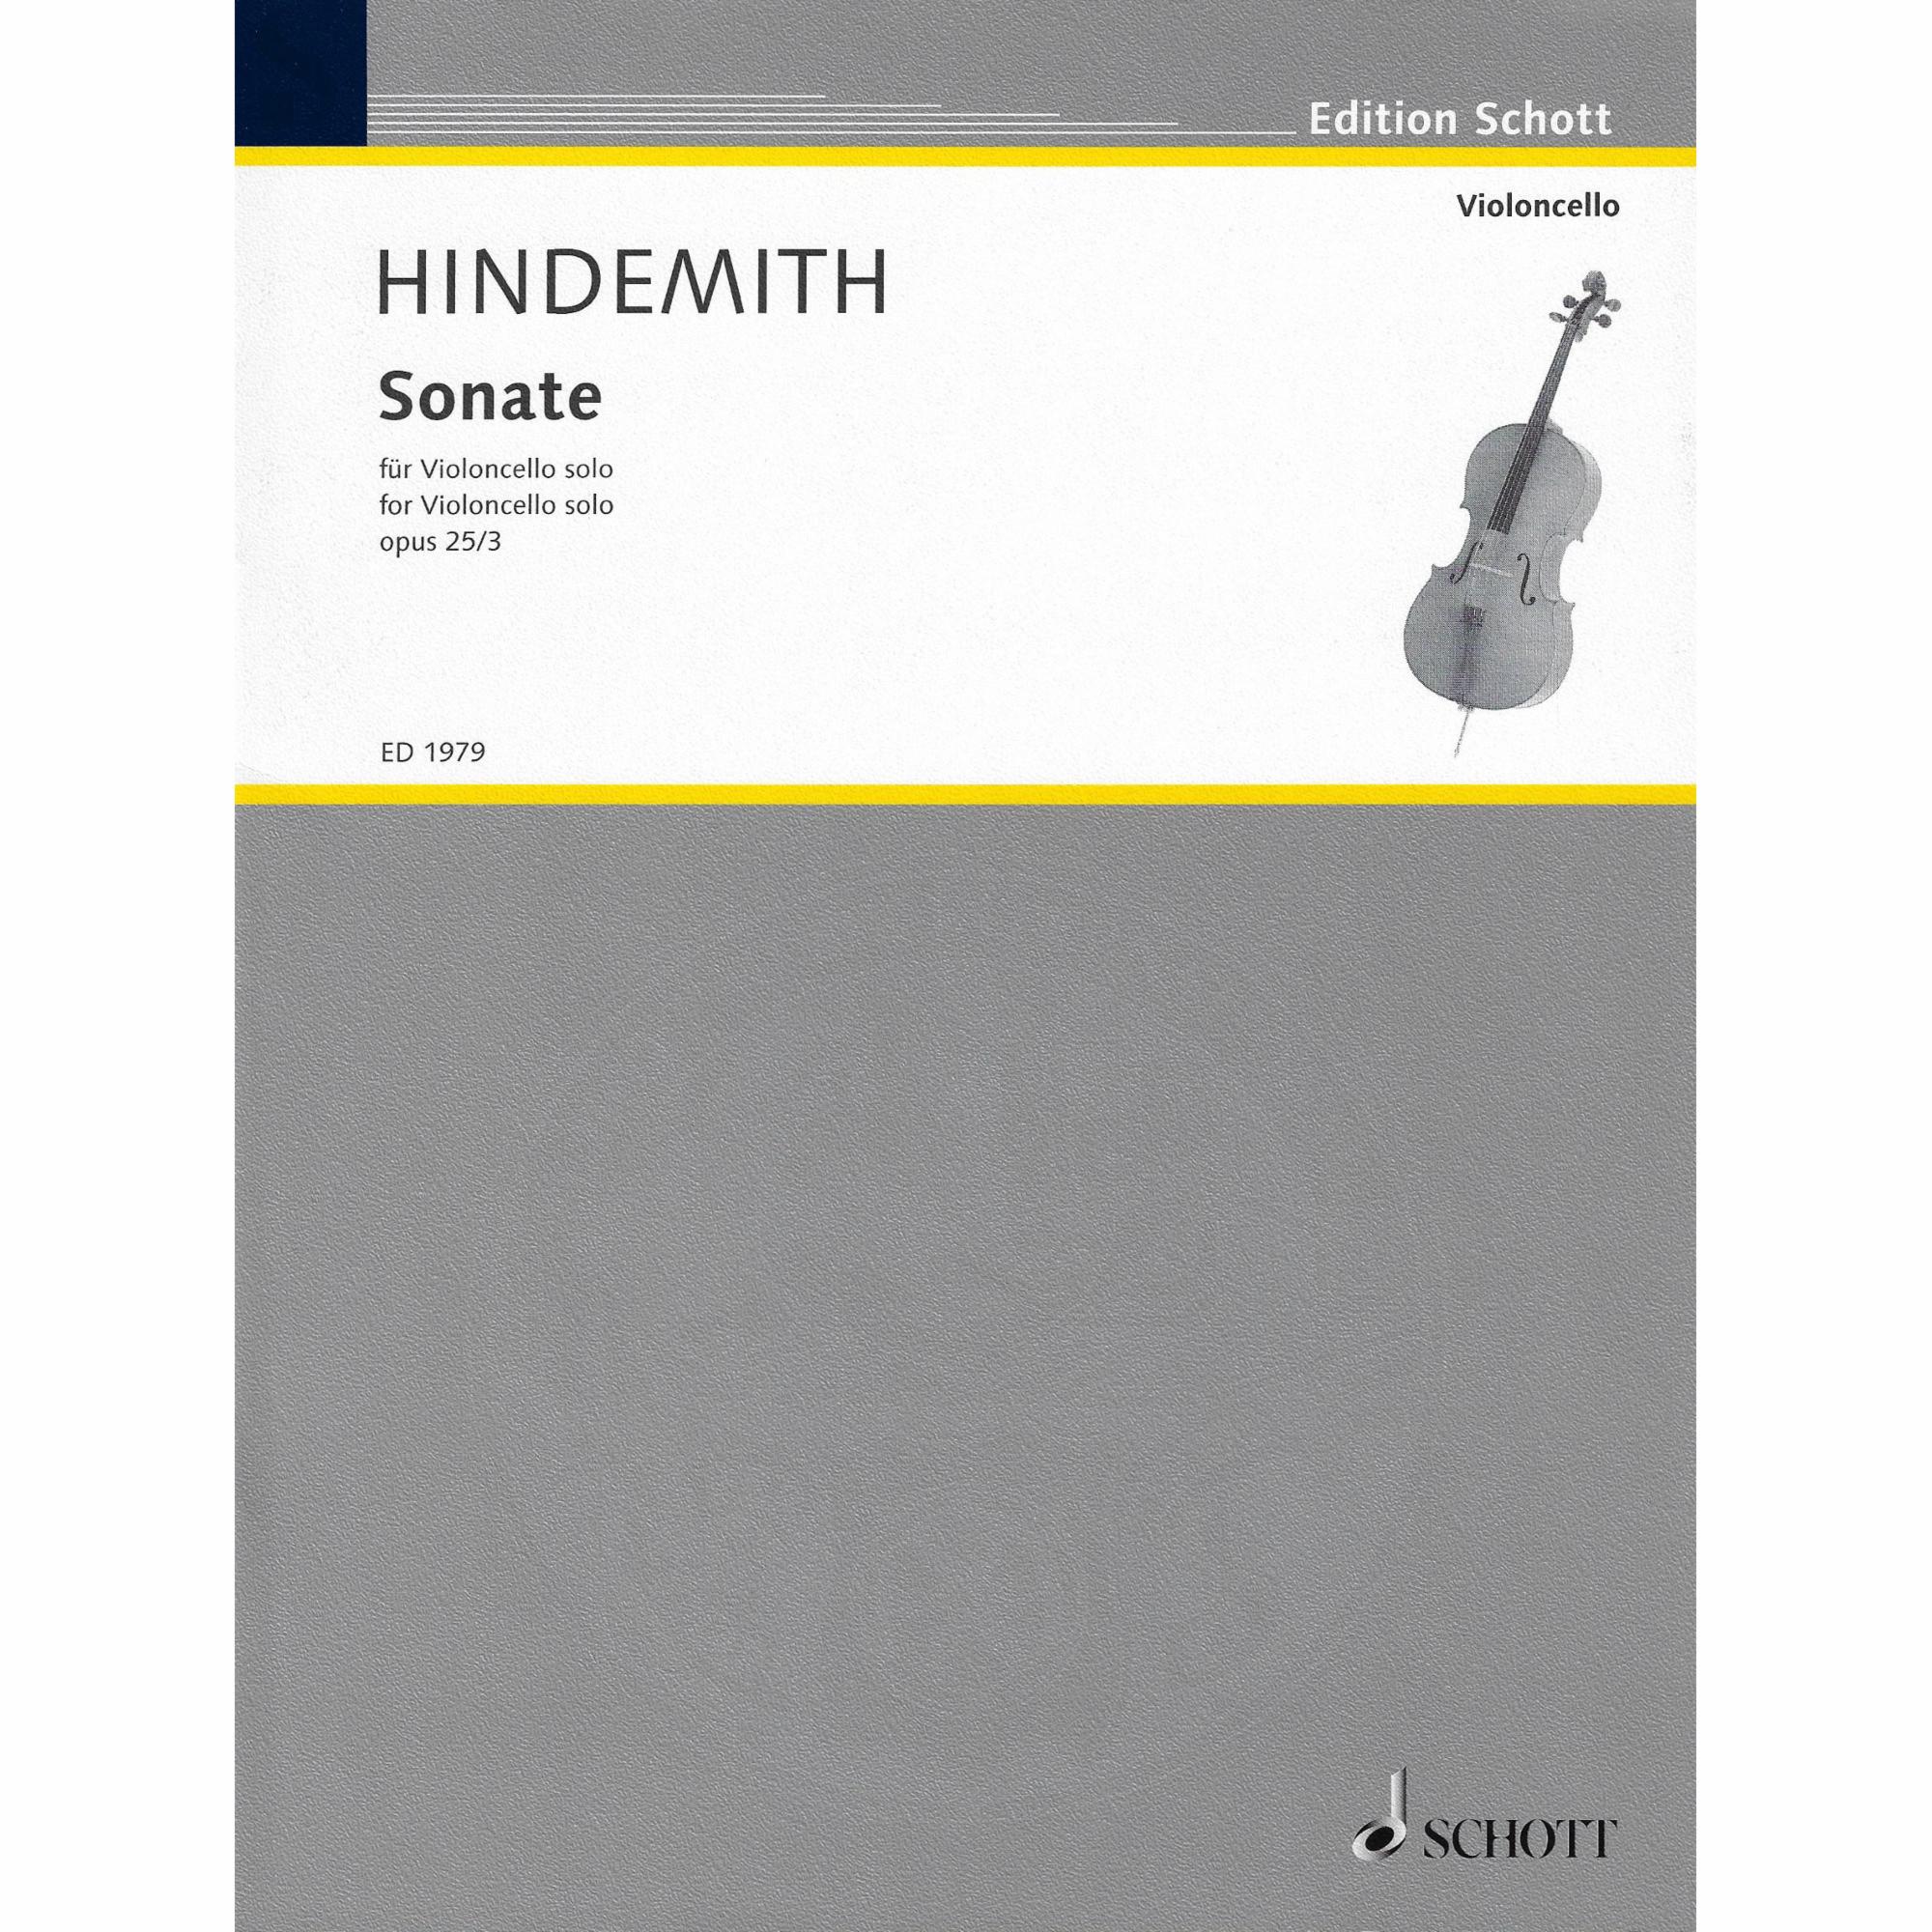 Hindemith -- Sonata, Op. 25/3 for Solo Cello